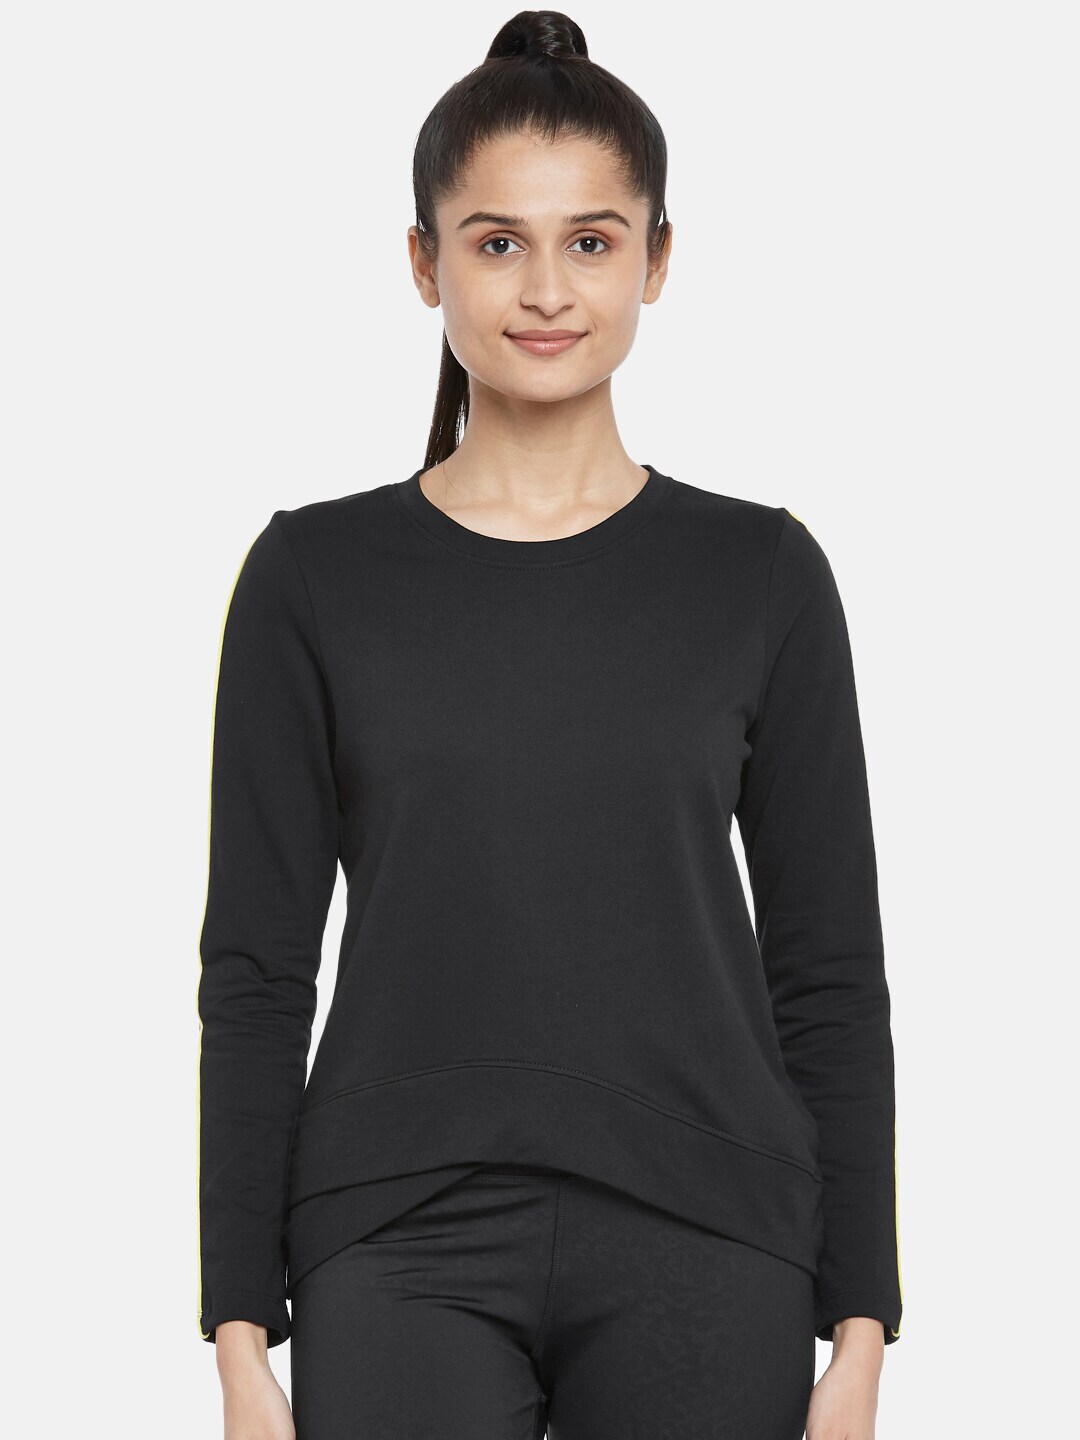 Ajile by Pantaloons Women Black Solid Sweatshirt Price in India